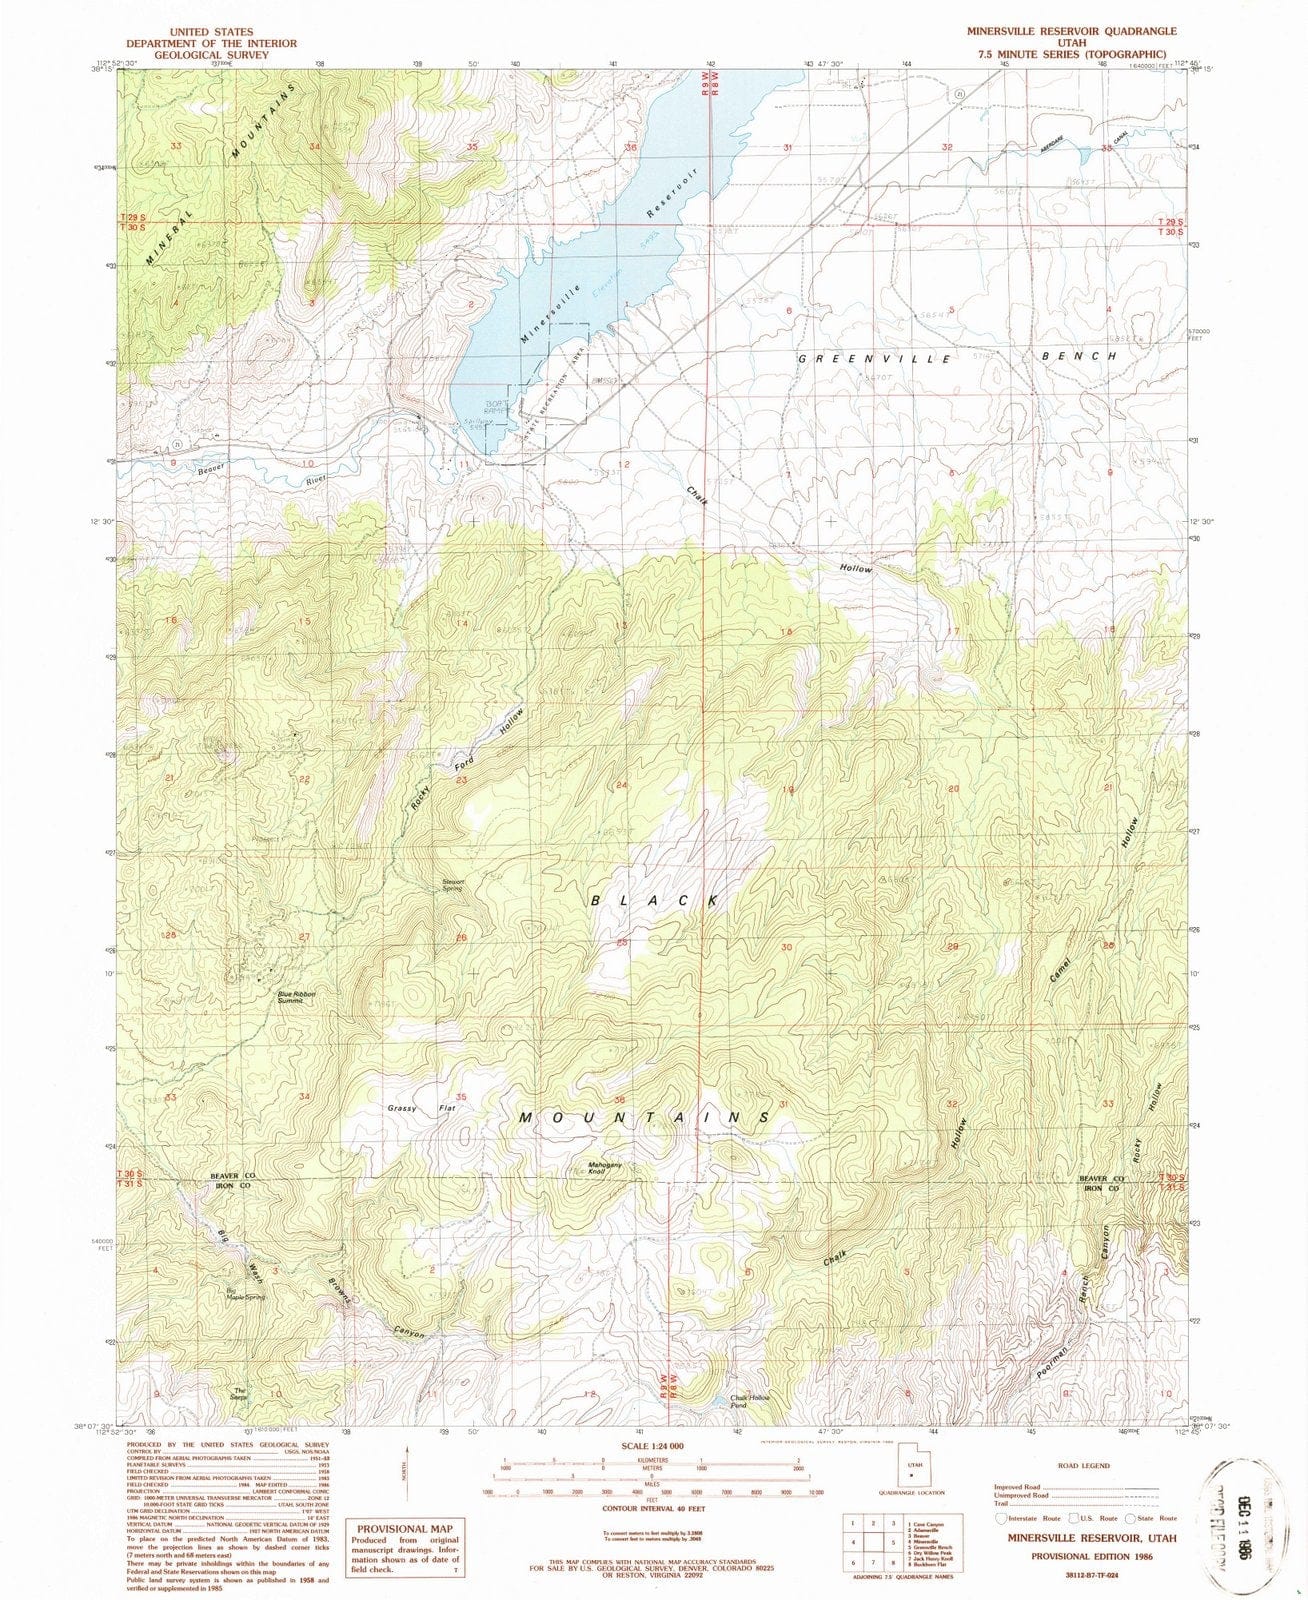 1986 Minersville Reservoir, UT - Utah - USGS Topographic Map